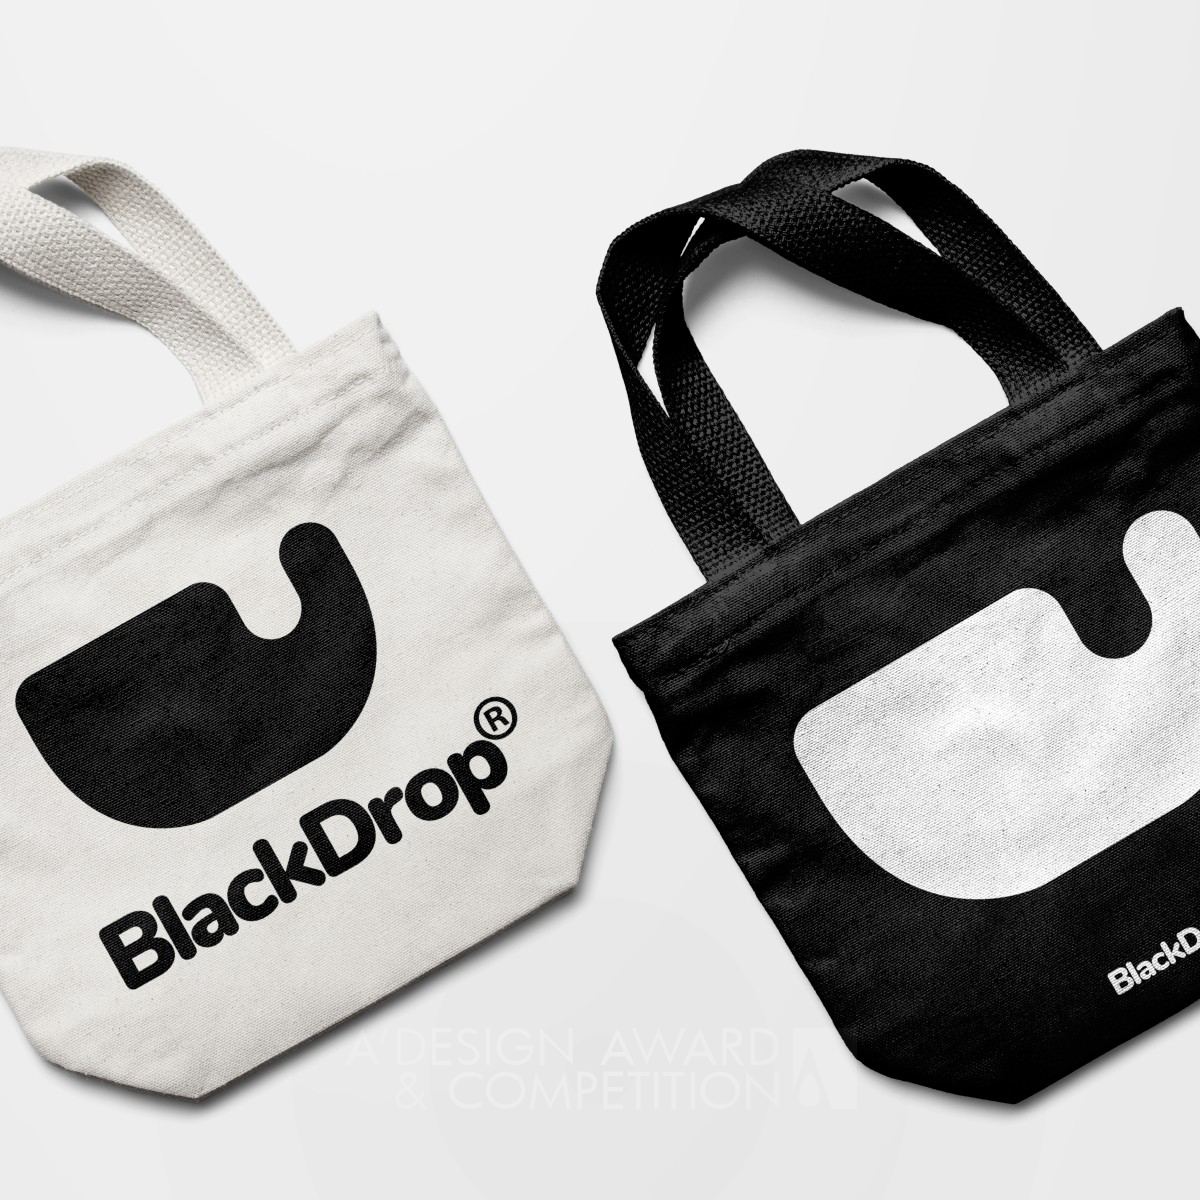 BlackDrop <b>Brand Identity